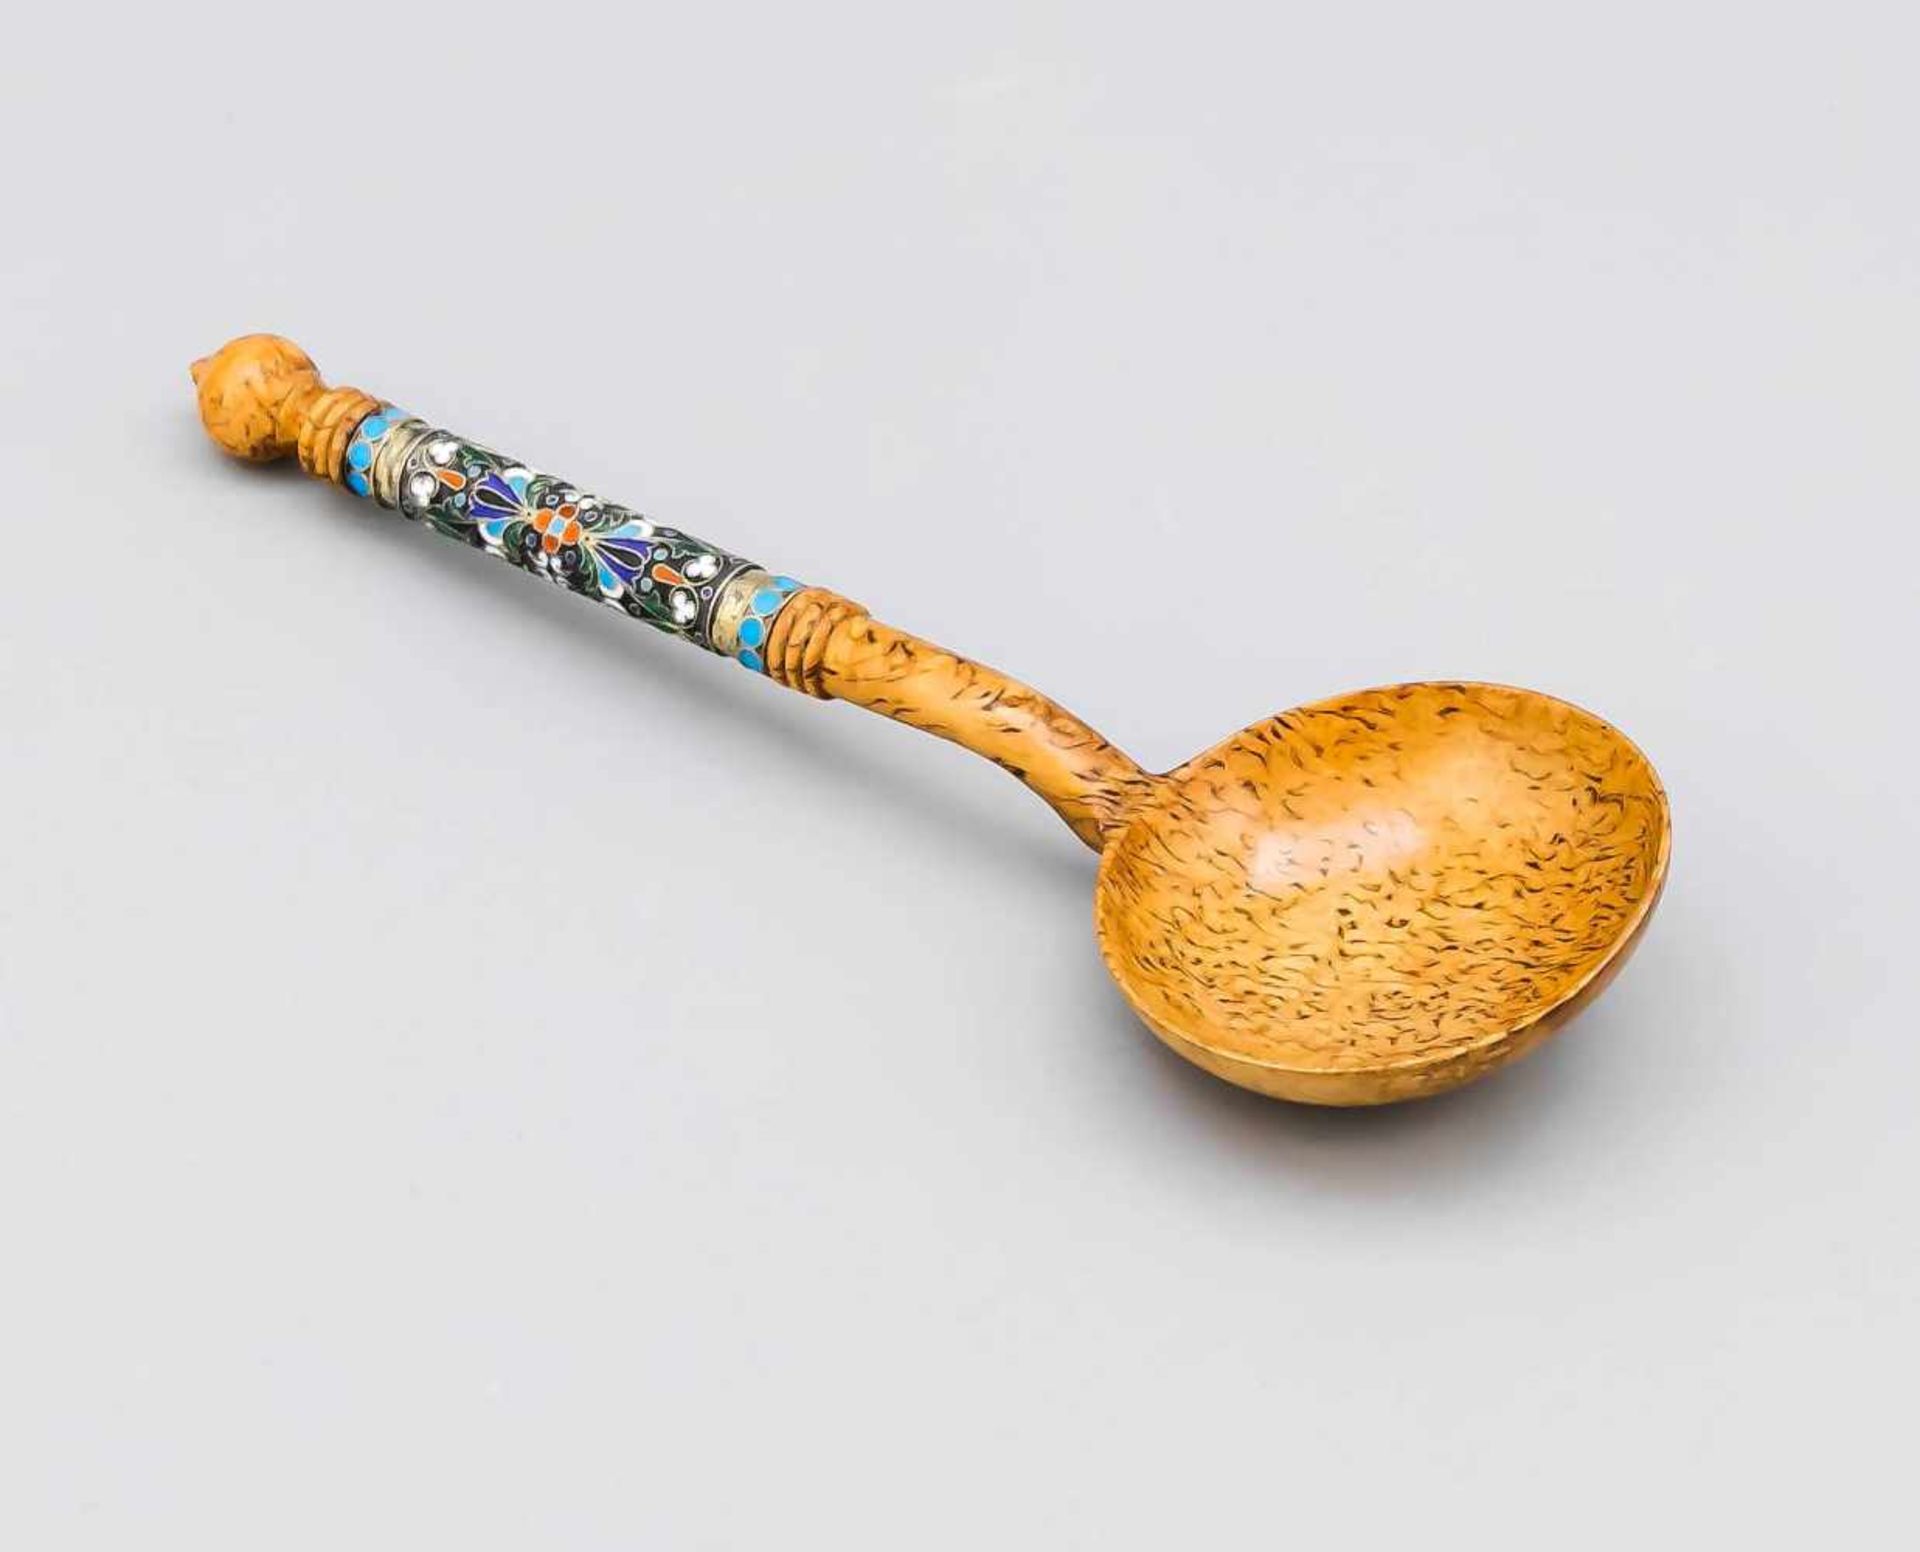 Caviar spoon, probably Russia, 19th century (?), Mokau (?), Burl wood, handle with cuff,